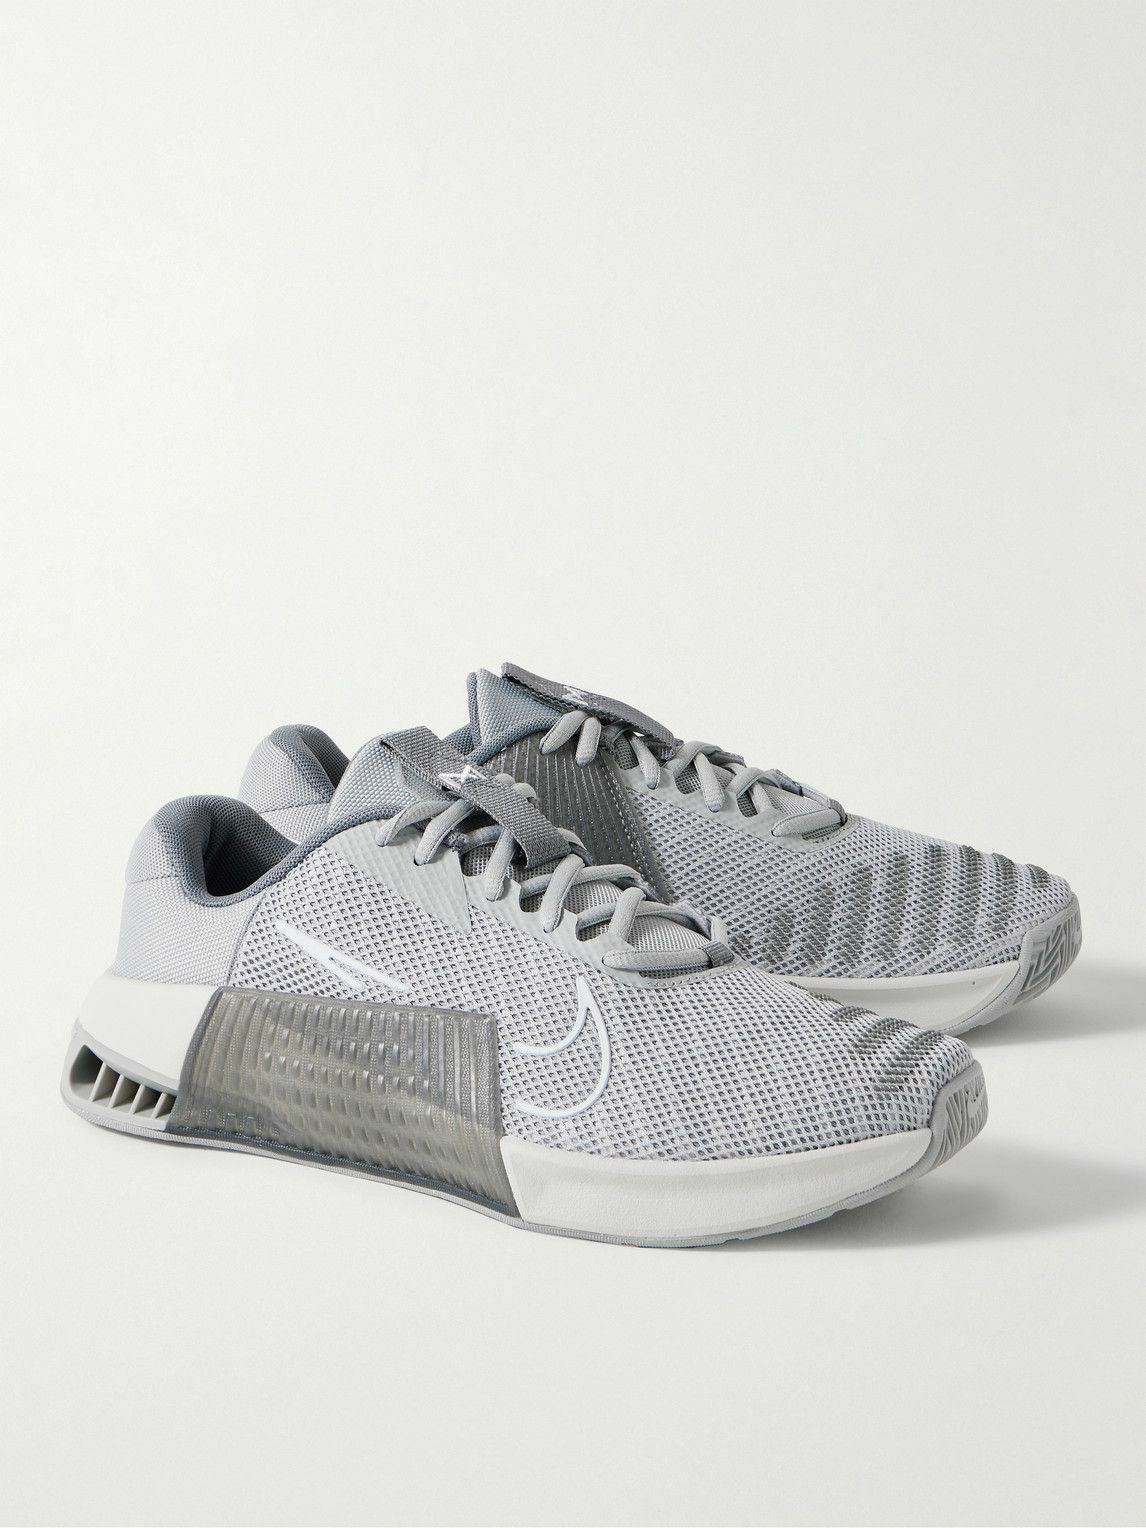 Nike Metcon 9 sneakers in black & gray